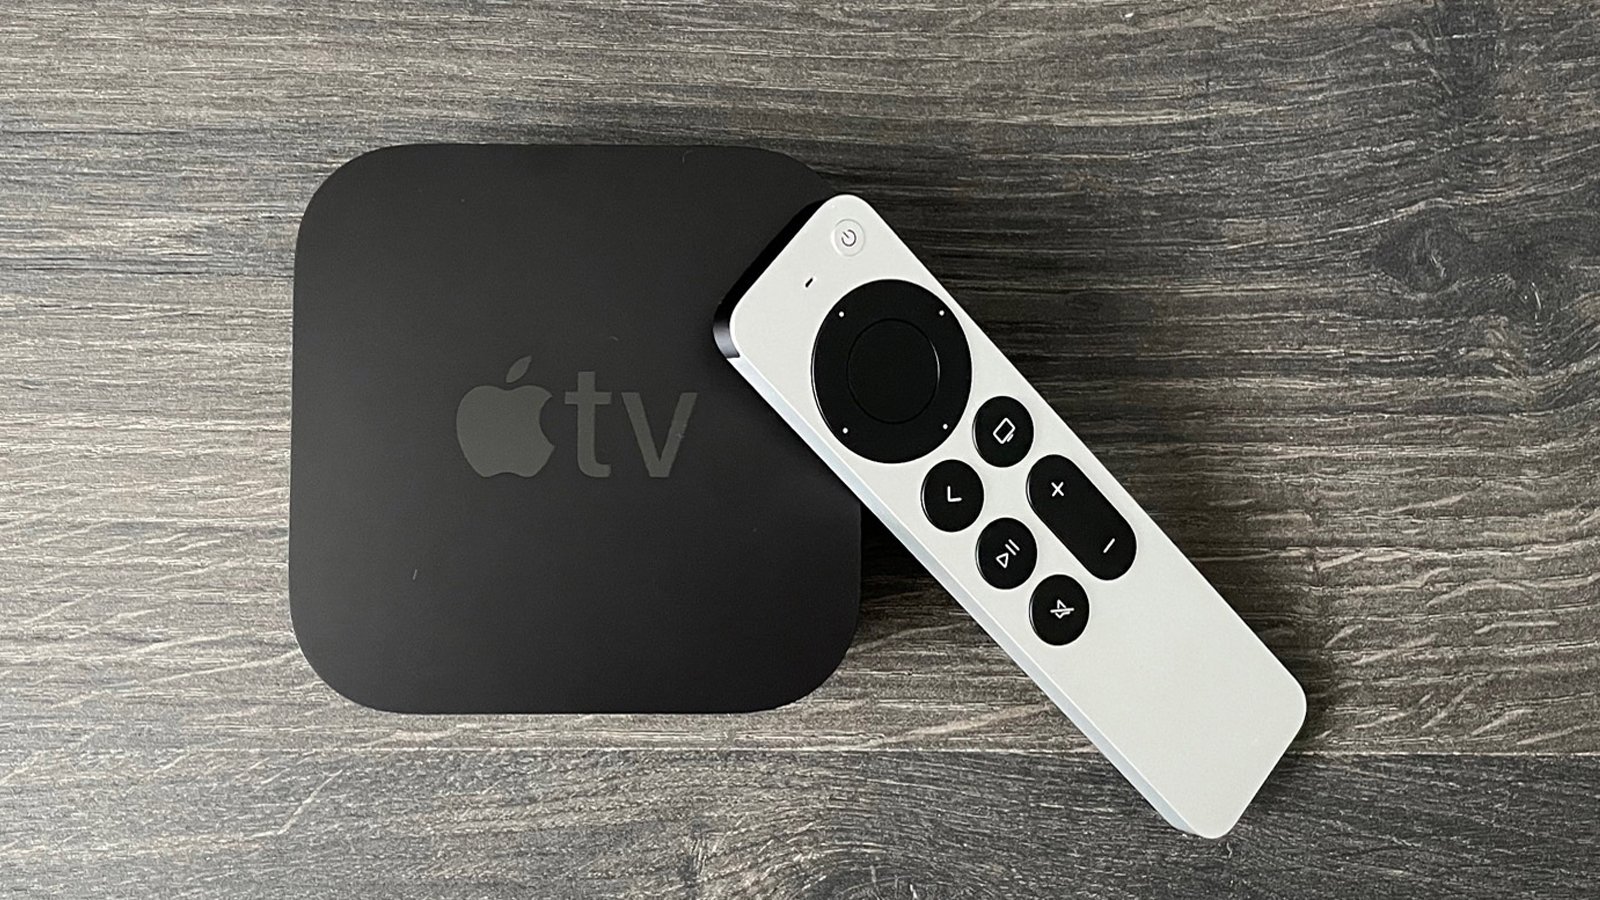 Se rumorea que un Apple TV mas barato se lanzara